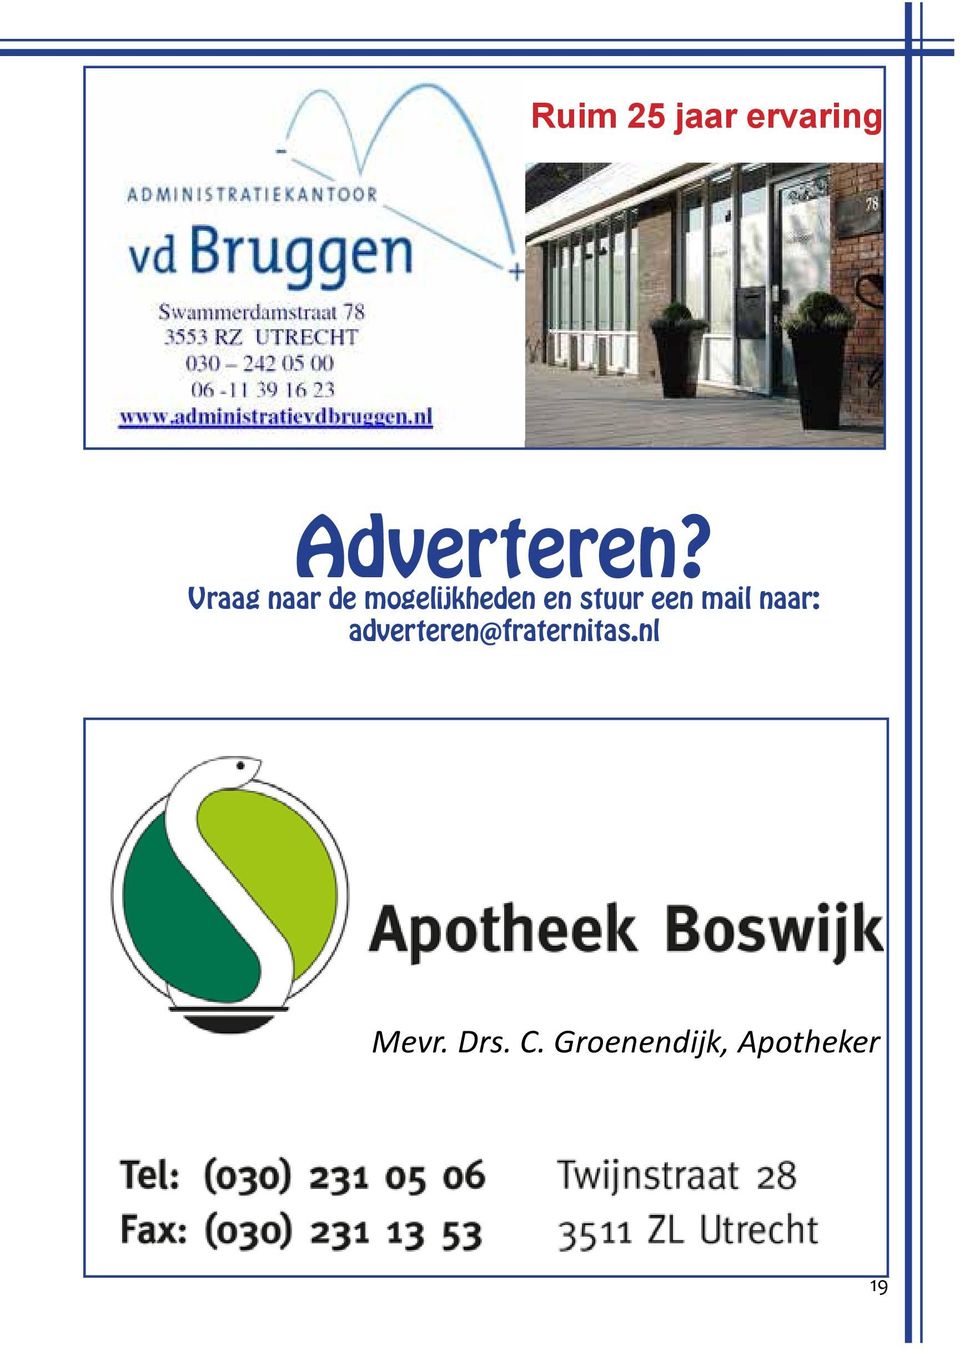 adverteren@fraternitas.nl APOTHEEK D.G. BOSW C. van Steensel vd Aa Apotheker Mevr. Drs. C. Groenendijk, Apotheker Open: ma t/m vrij.